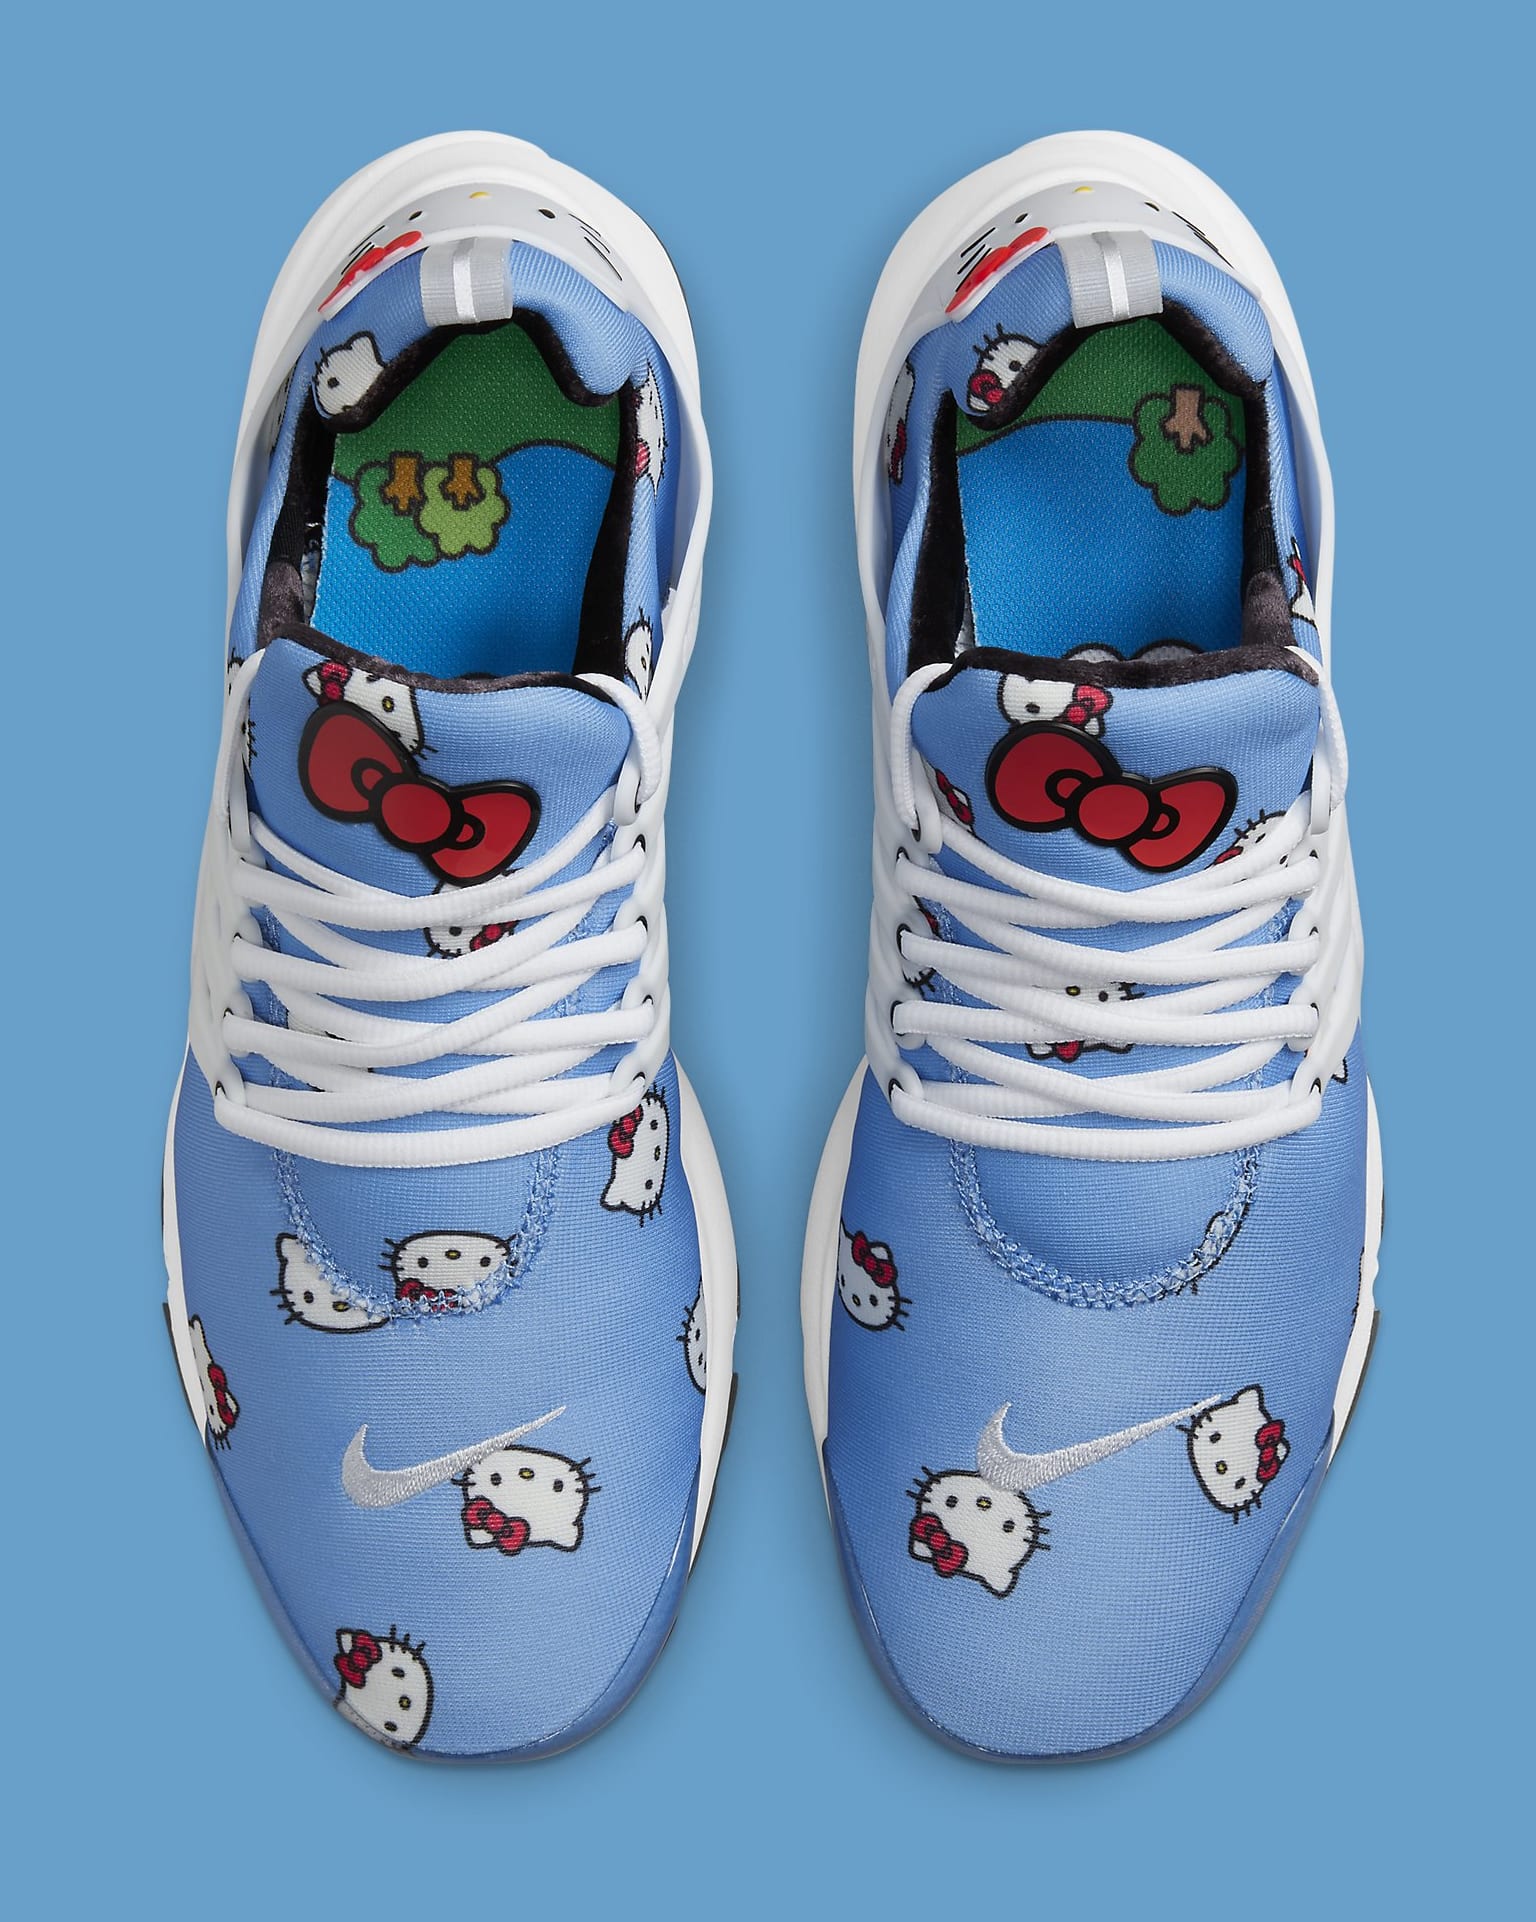 New Nike Hello Kitty Air Presto Sneakers - Kids 1Y